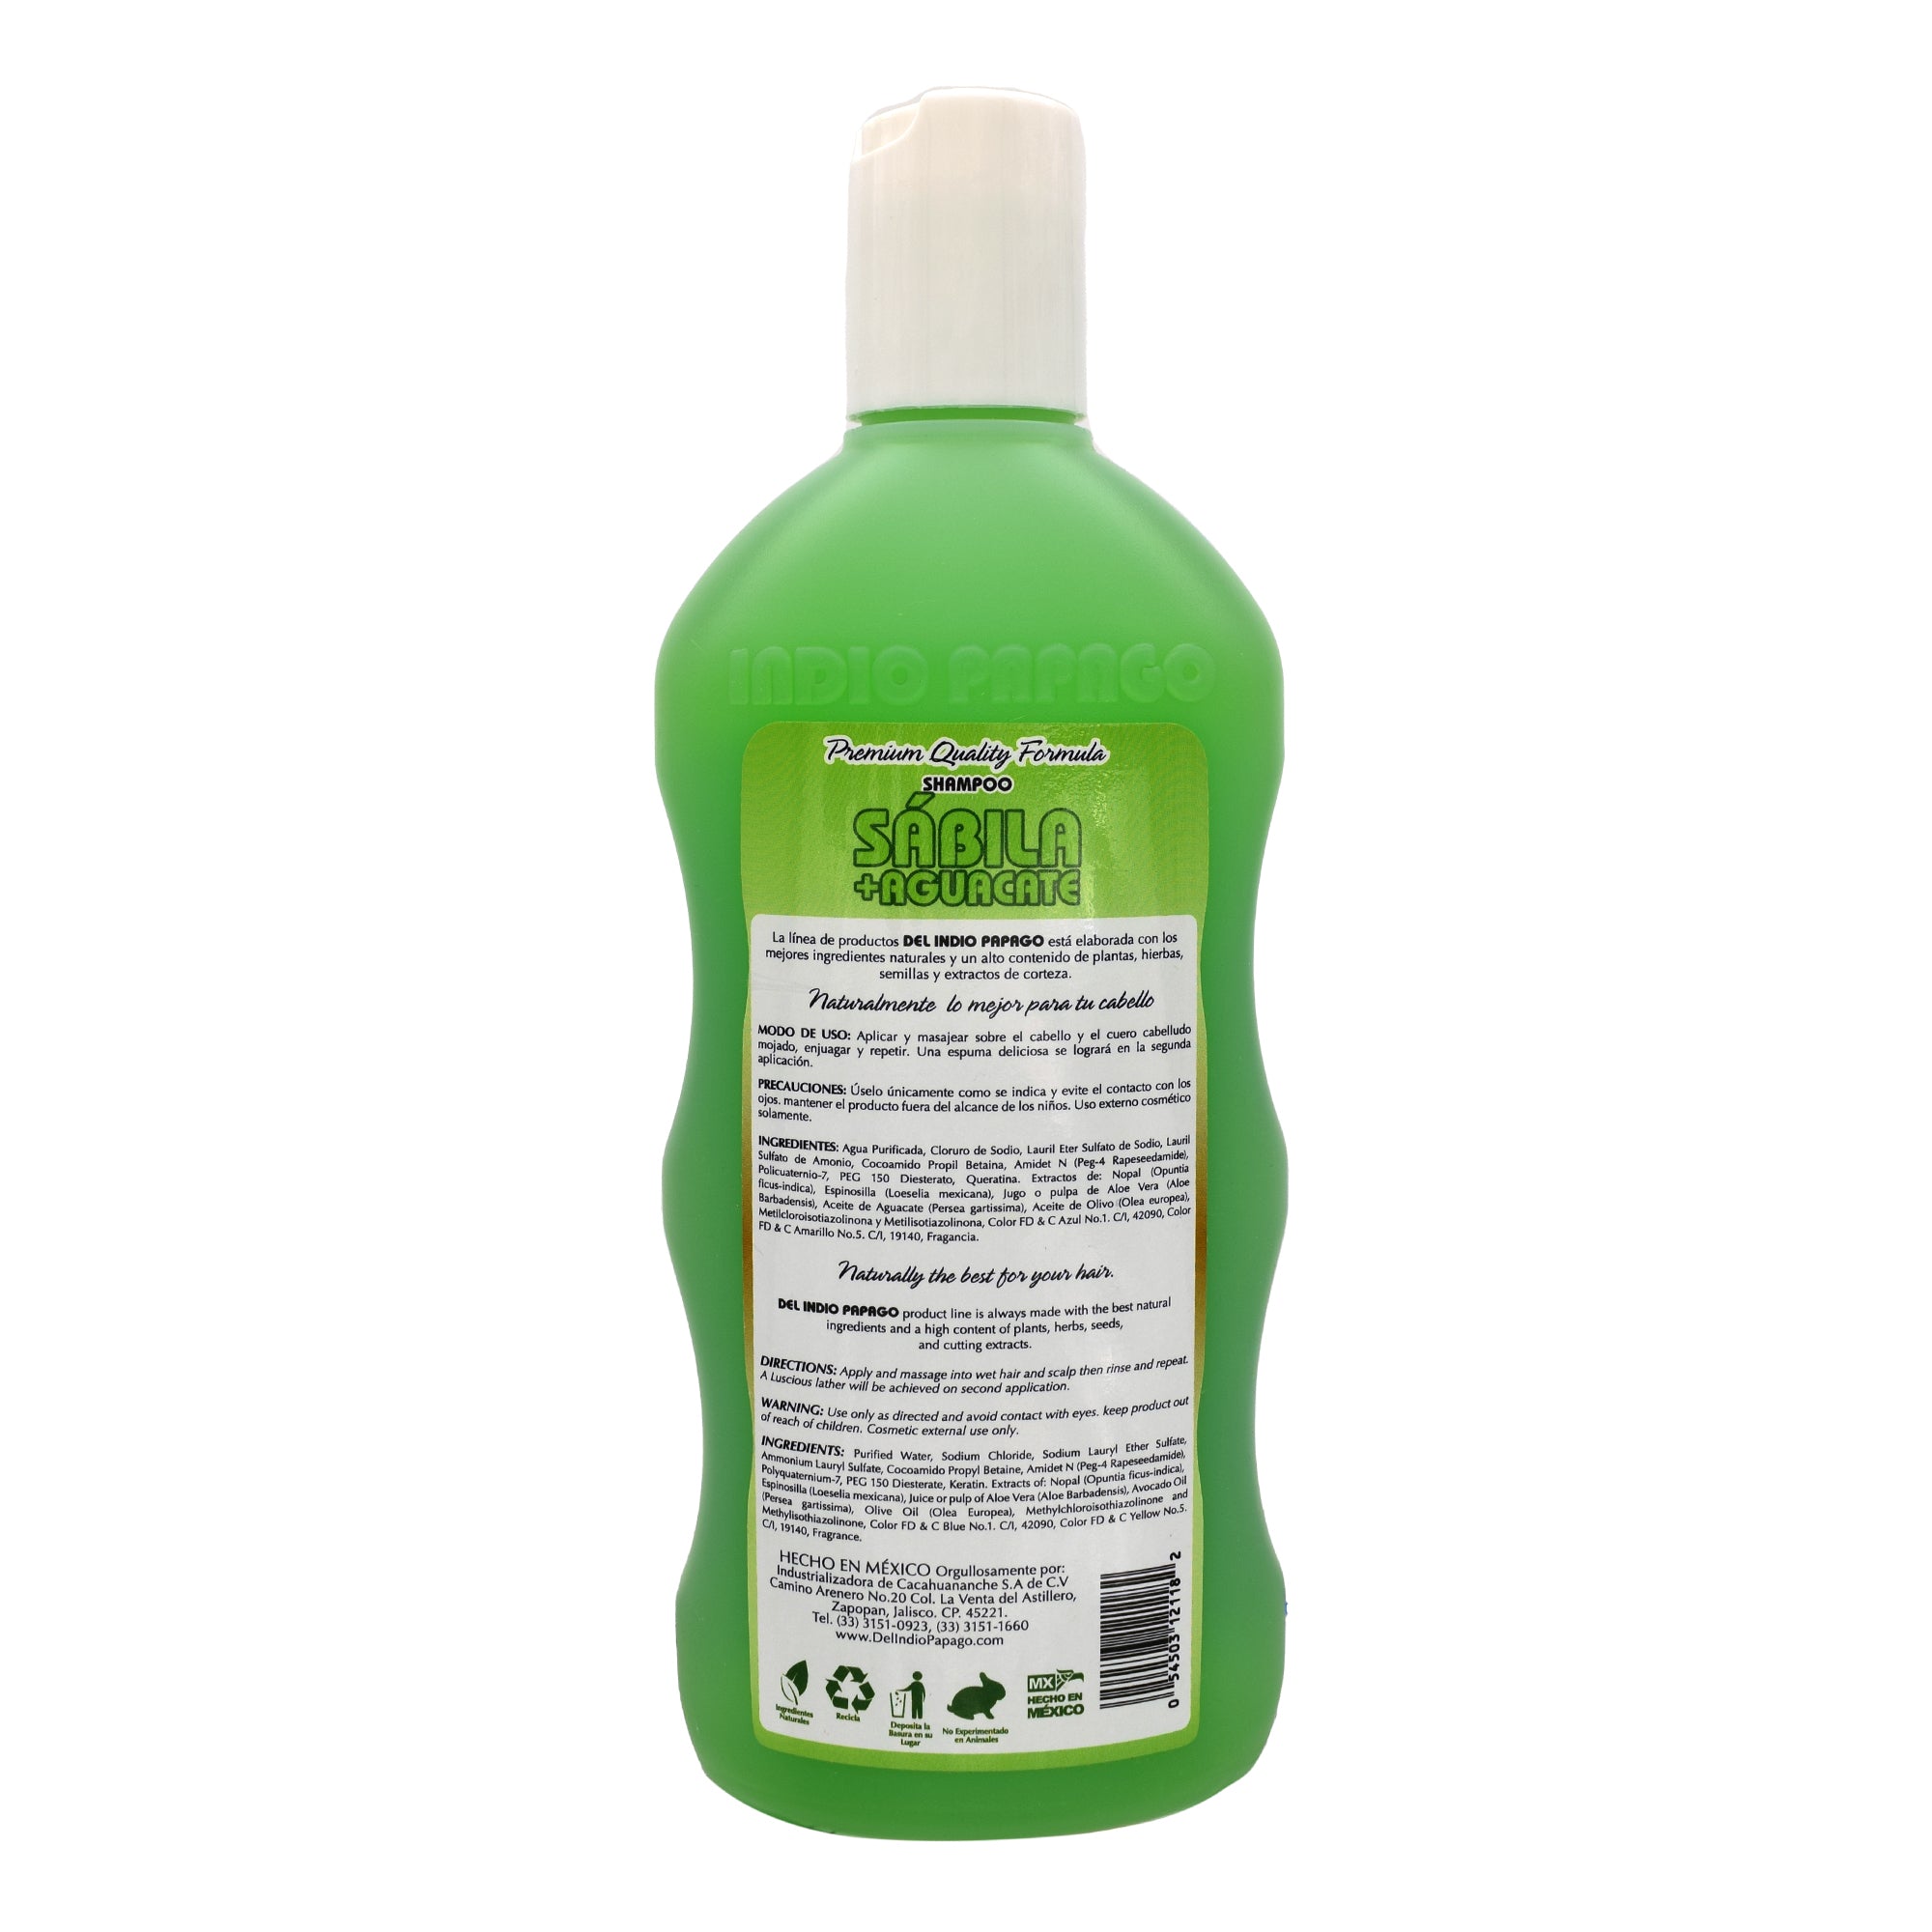 Shampoo sabila indio papago 550 ml